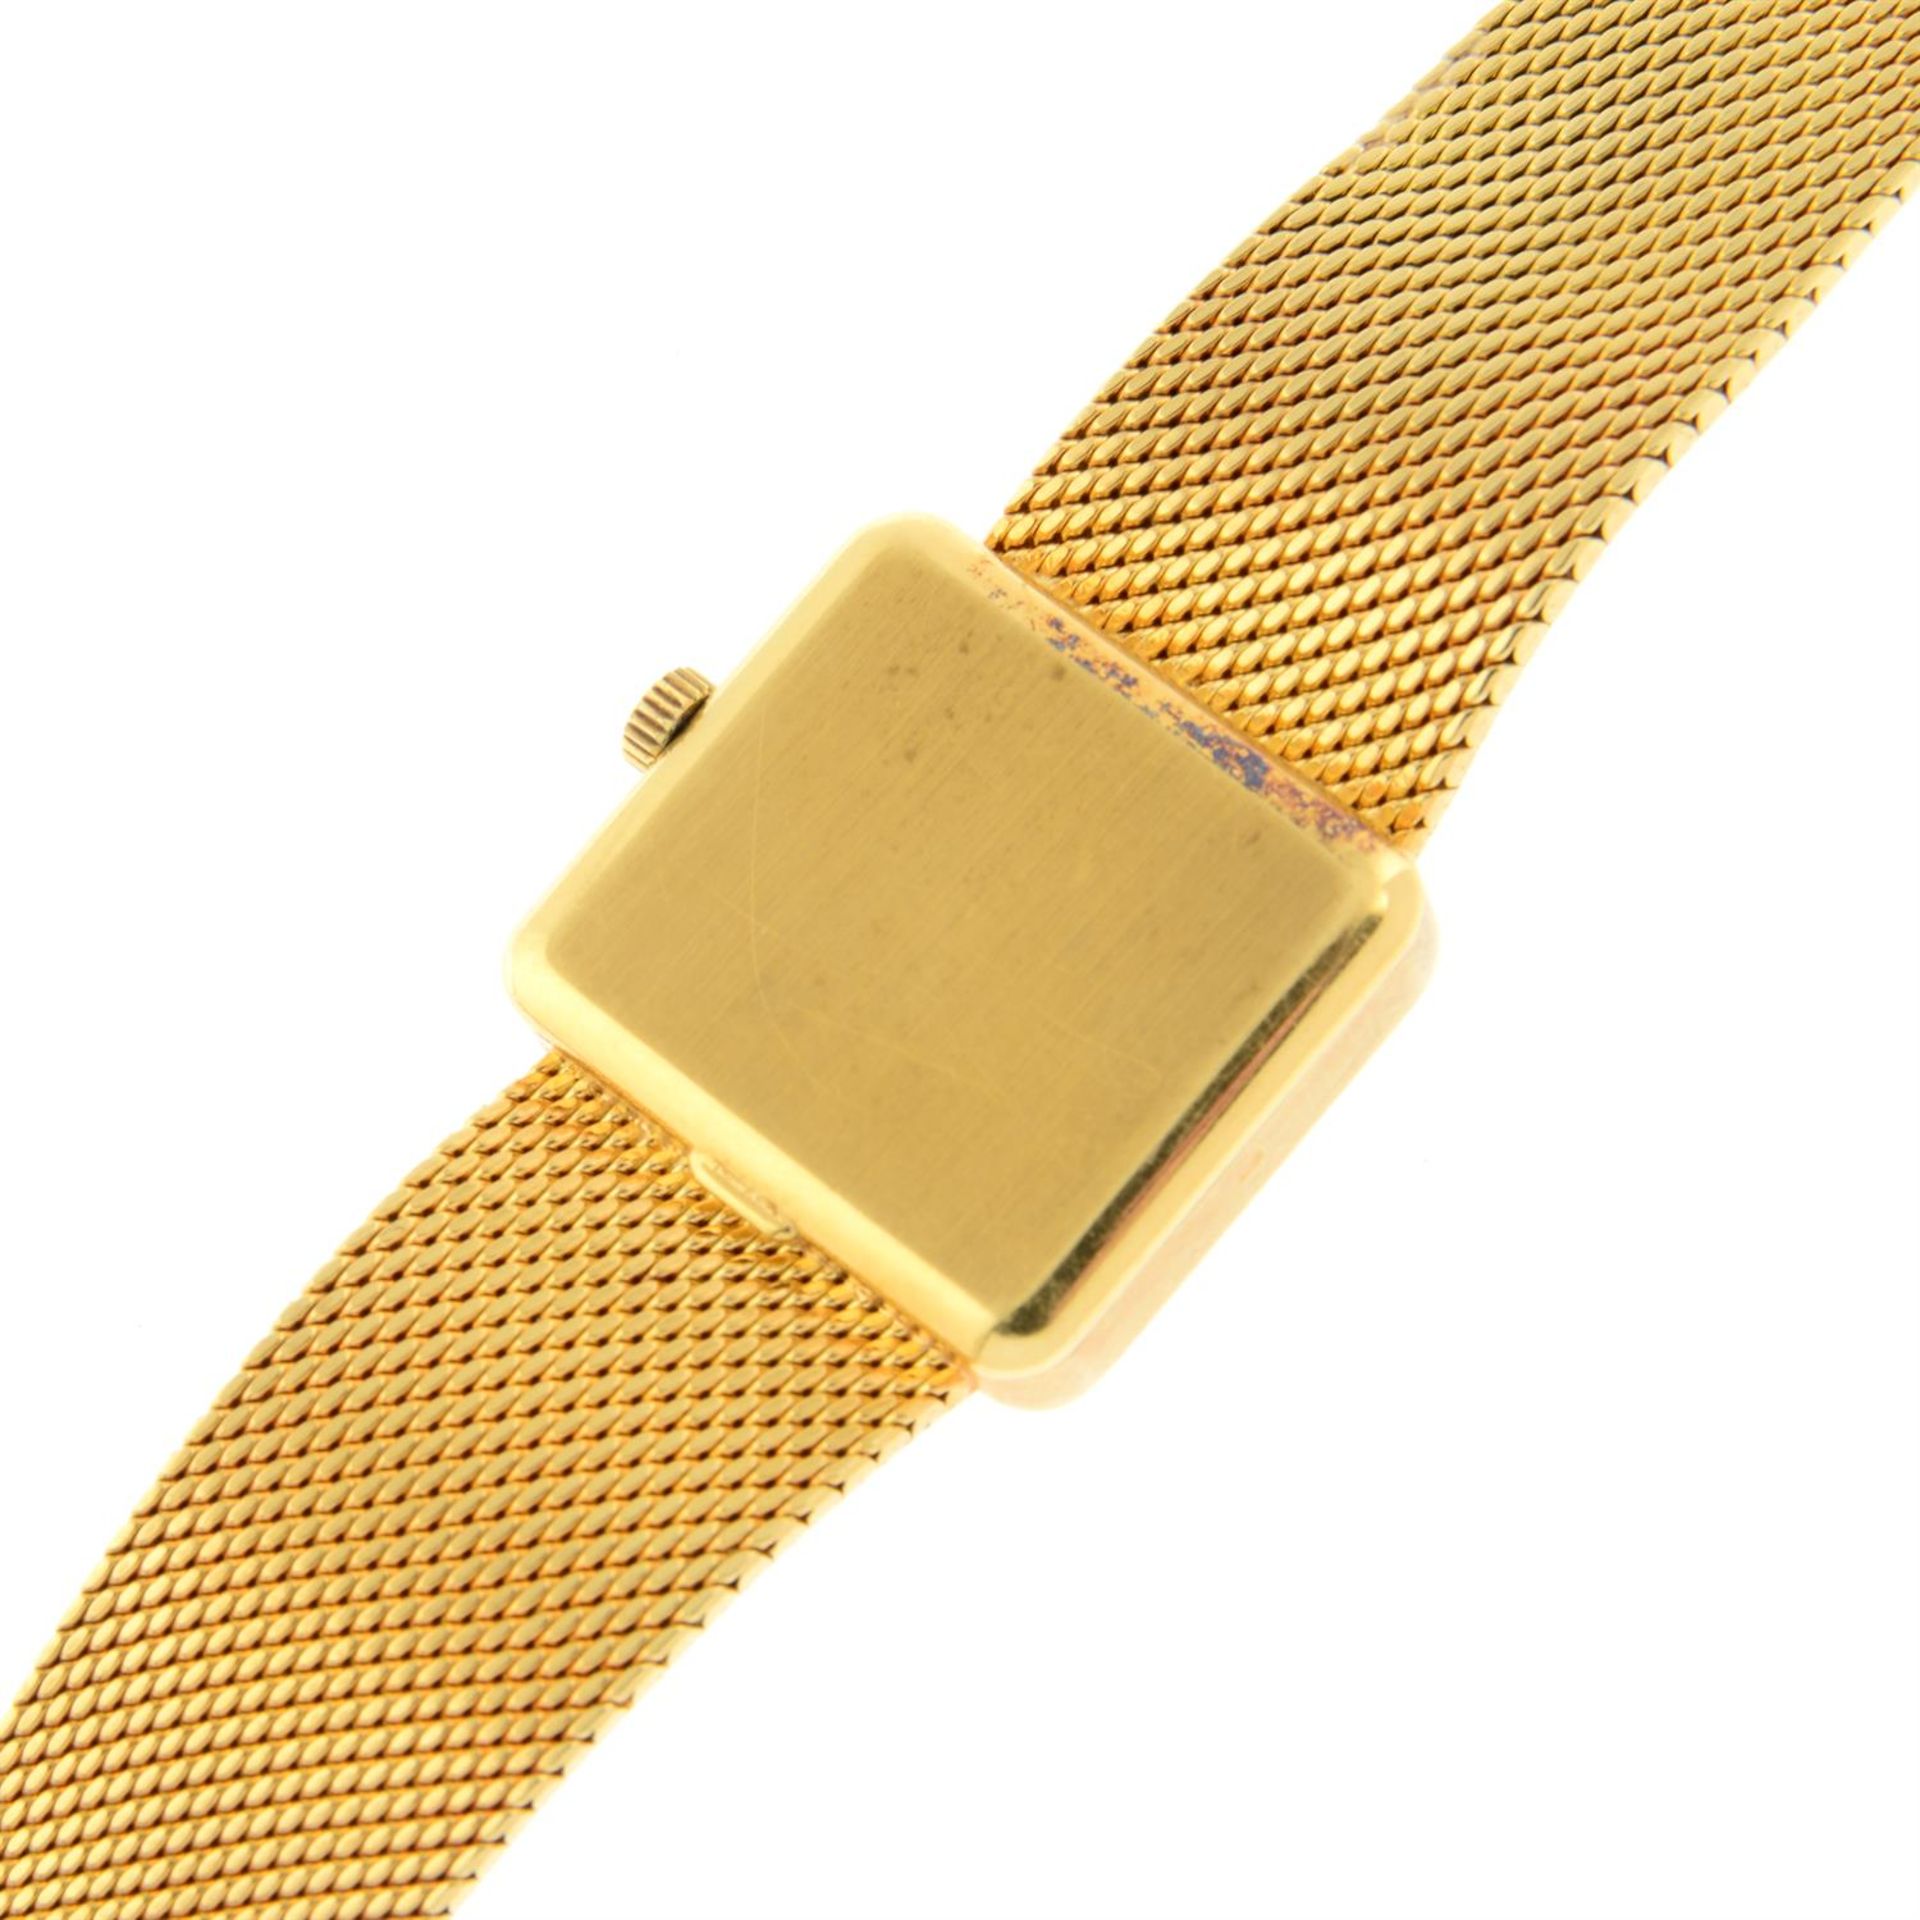 OMEGA - a yellow metal De Ville bracelet watch, 25x22mm. - Image 4 of 5